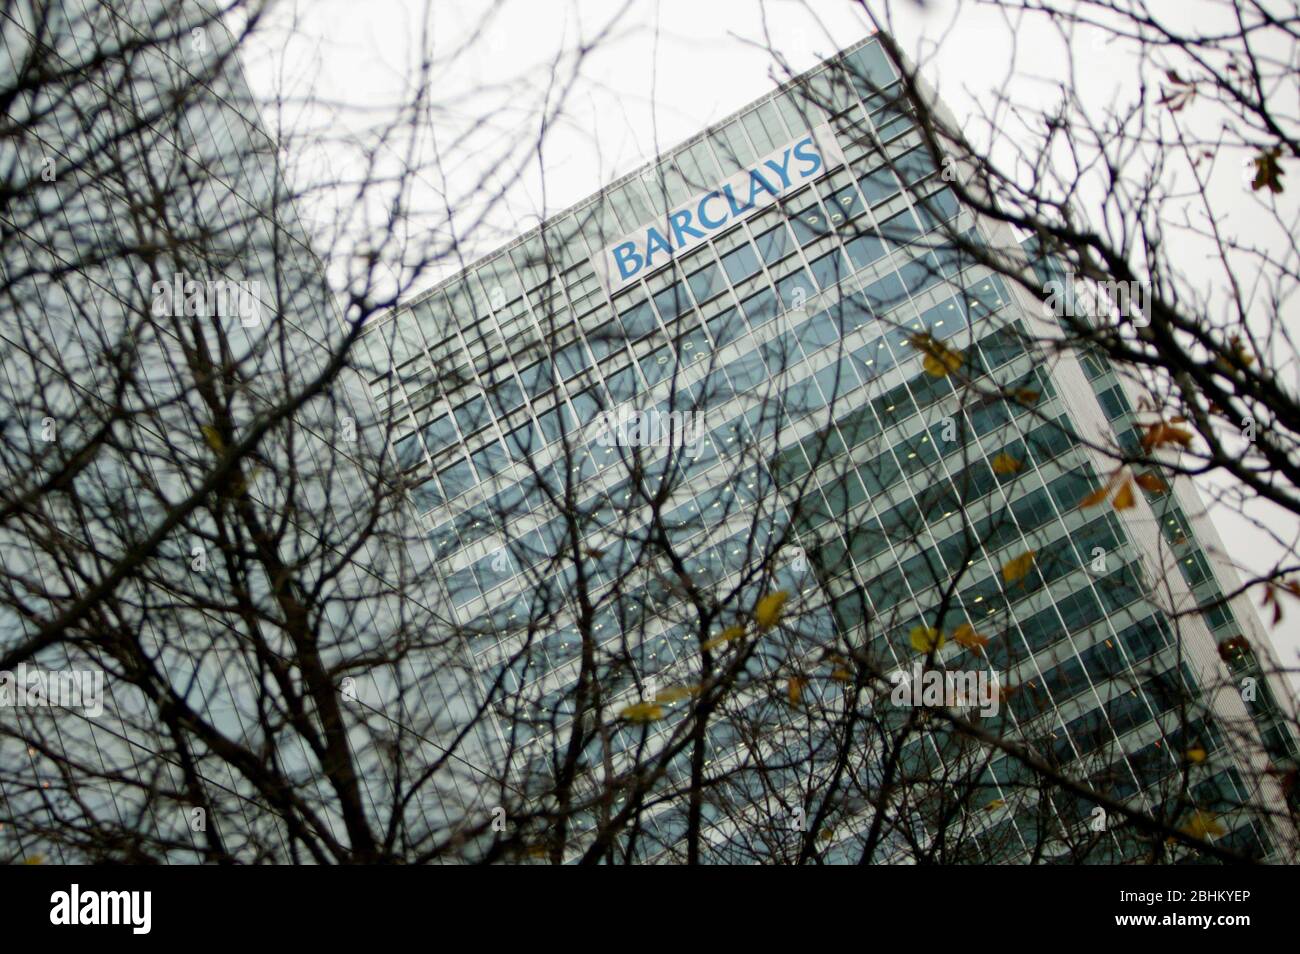 Barclays sede en Canary Wharf, Londres. Foto de stock